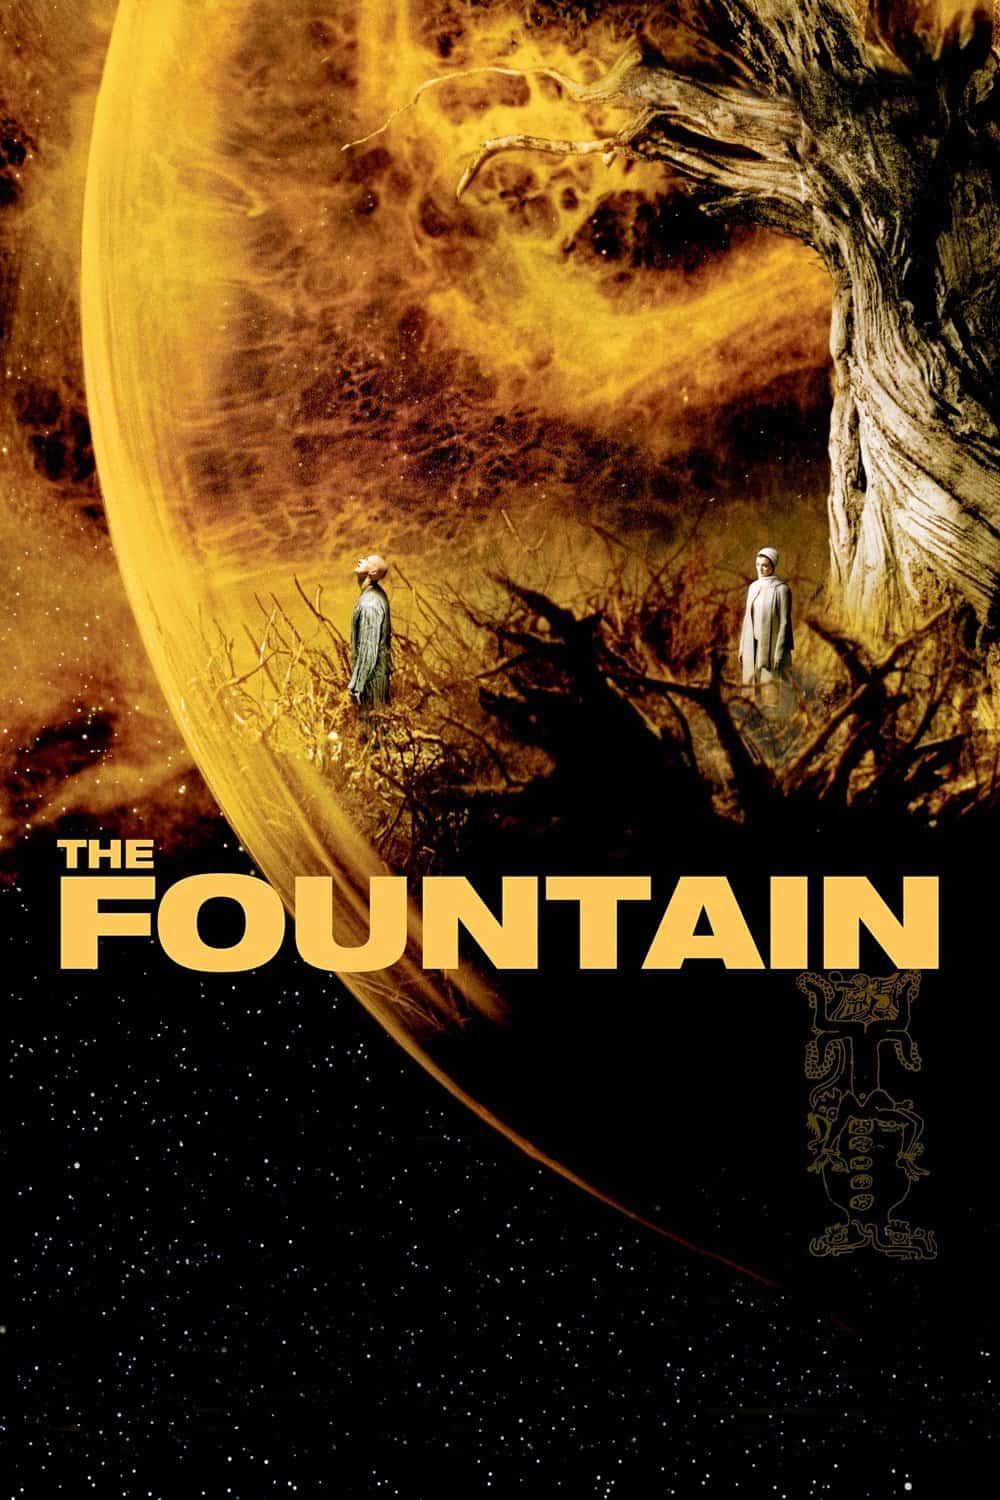 The Fountain, 2006 